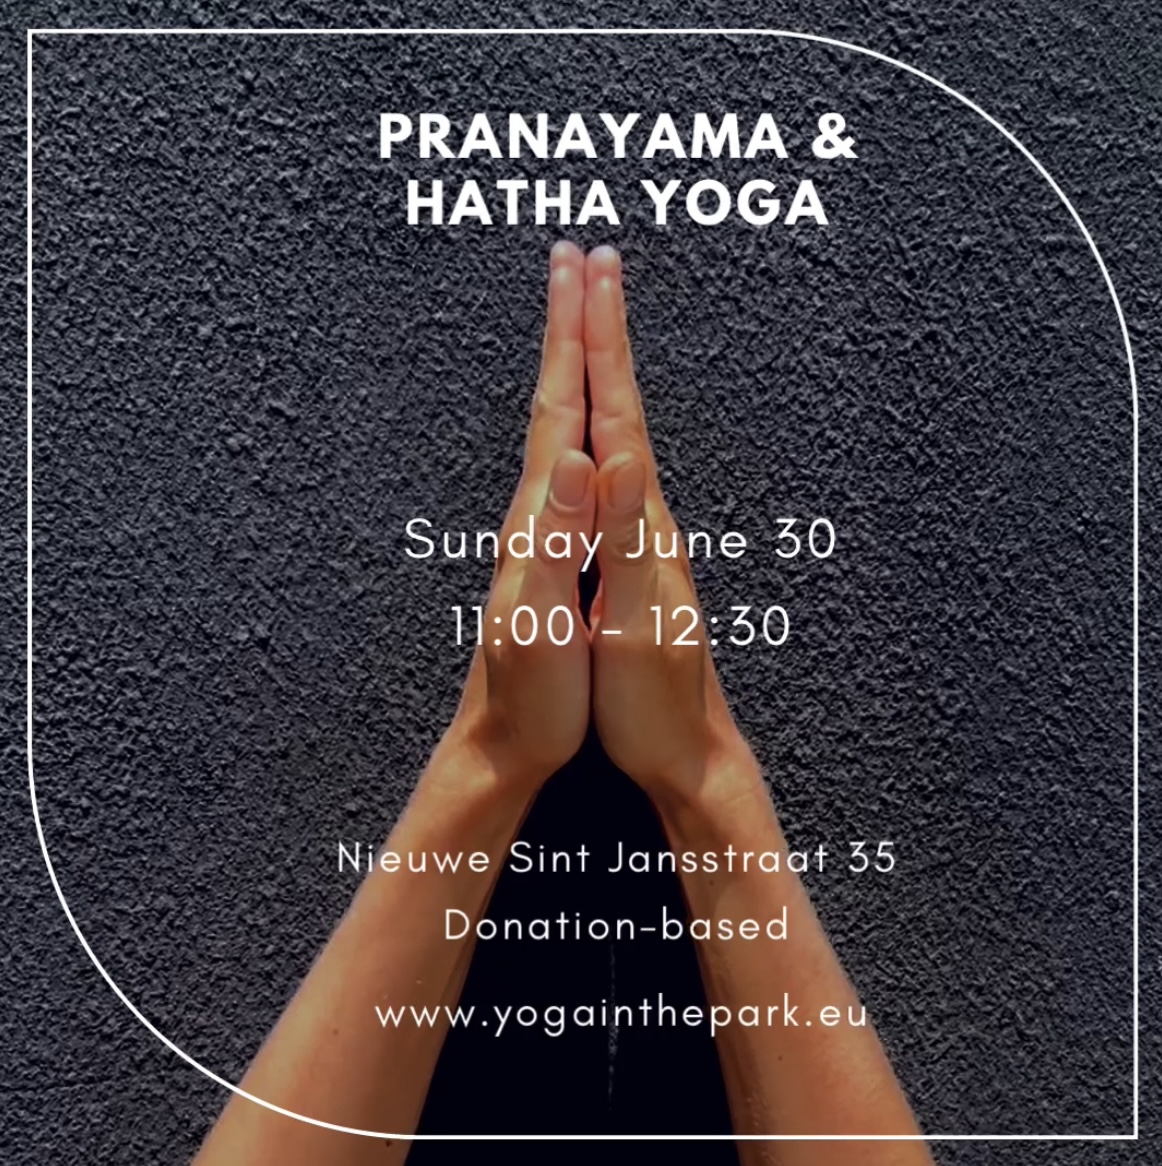 Pranayama & Hatha Yoga Class Sunday 30 June, 11:00 – 12:30 @Nieuwe Sint Jansstraat 35